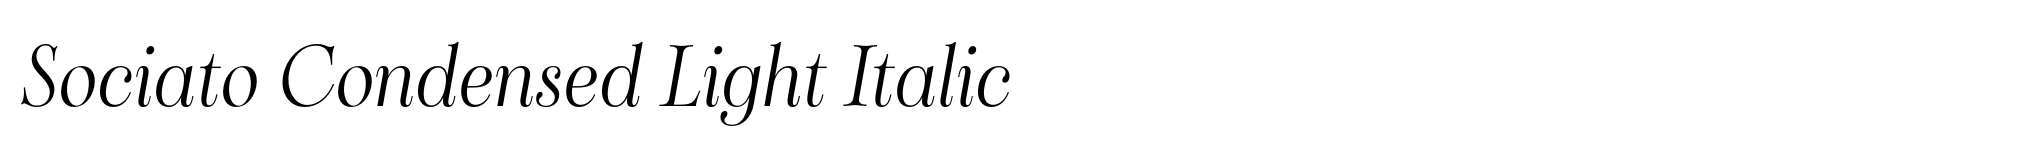 Sociato Condensed Light Italic image